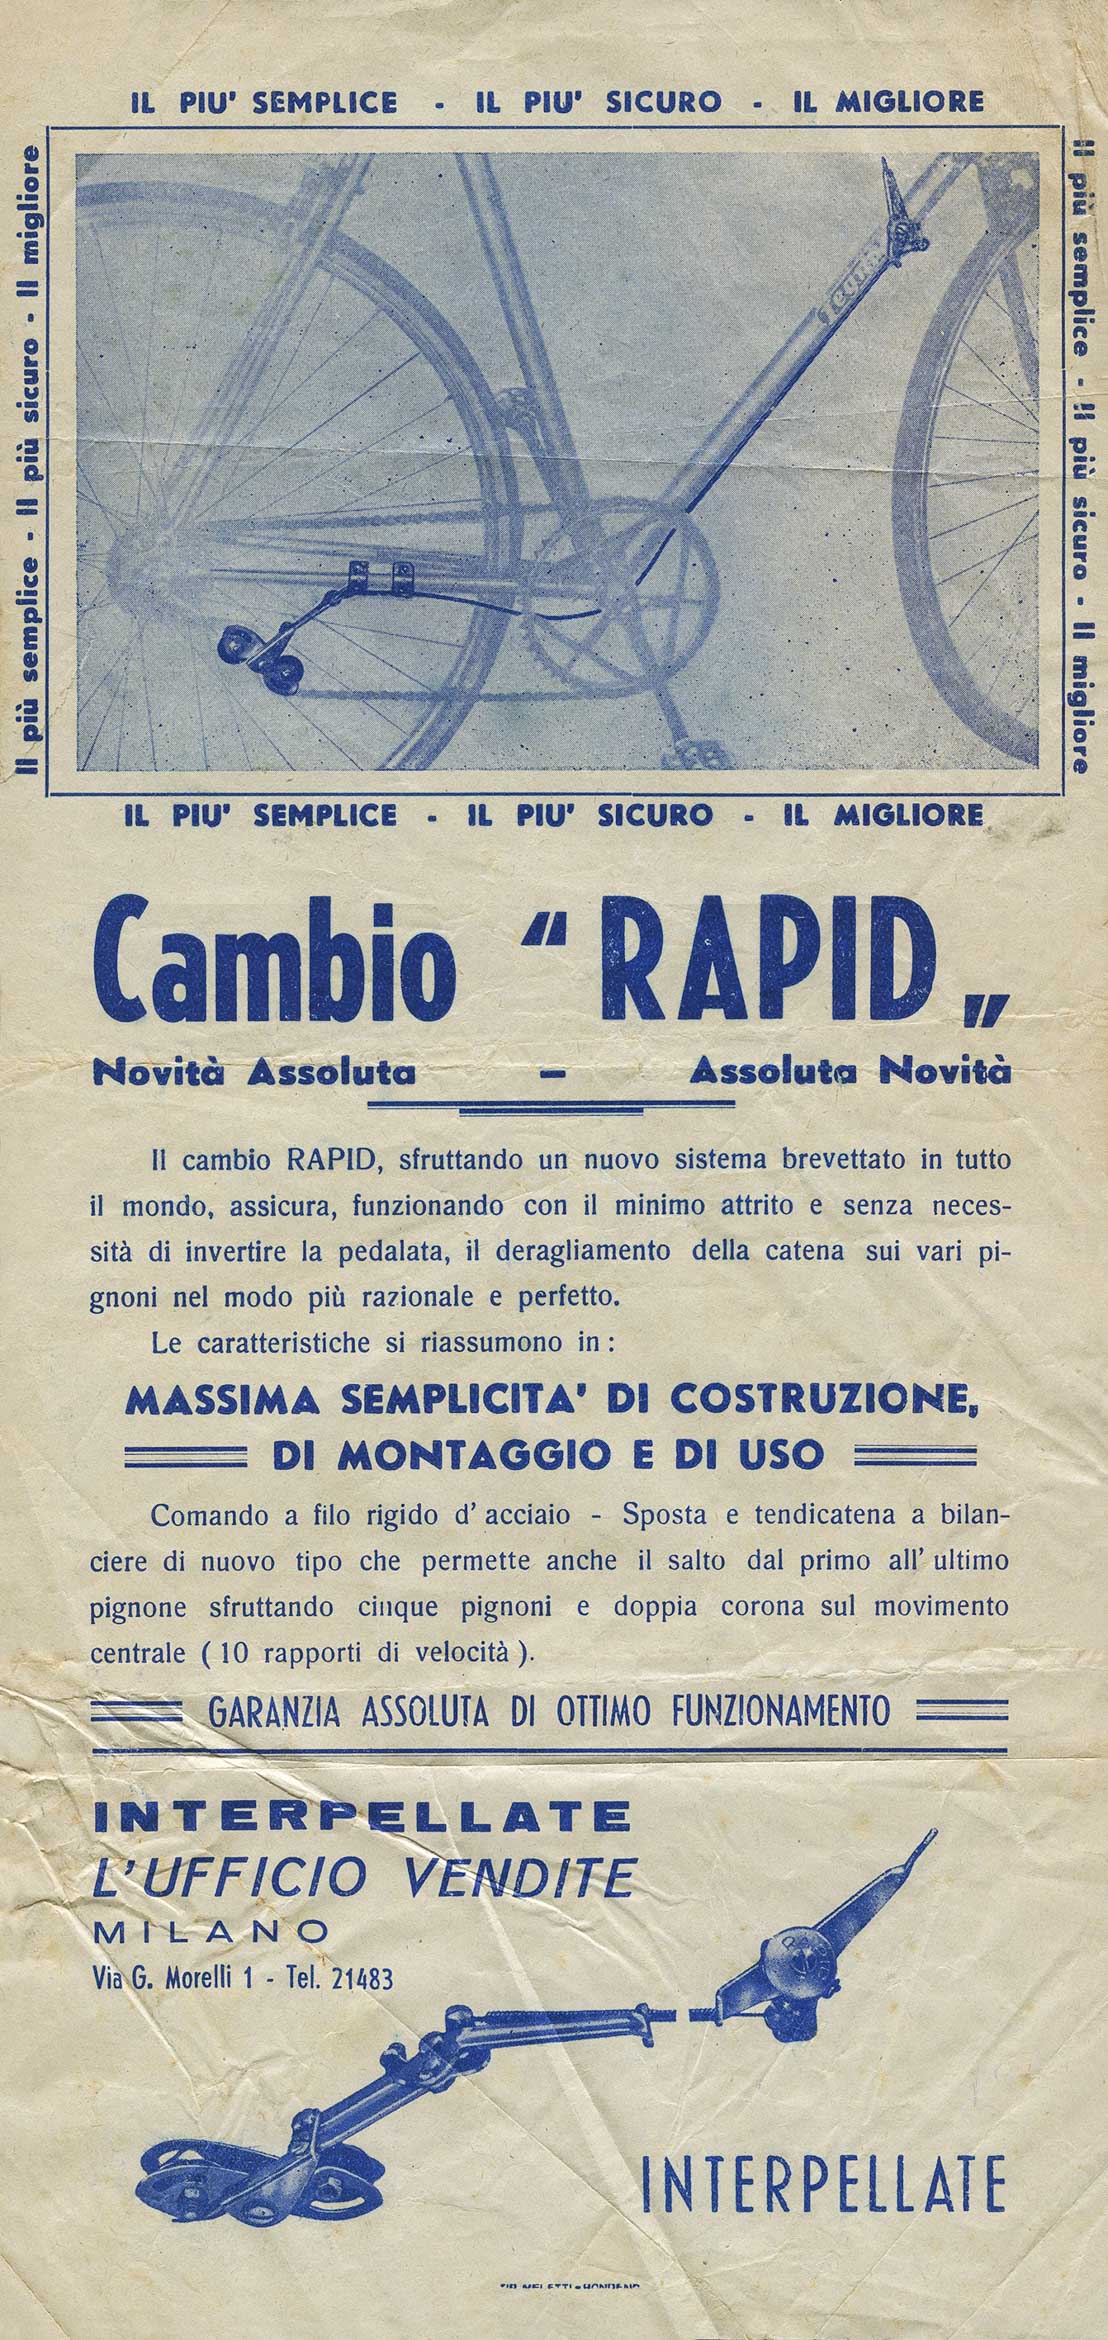 Cambio Rapid main image